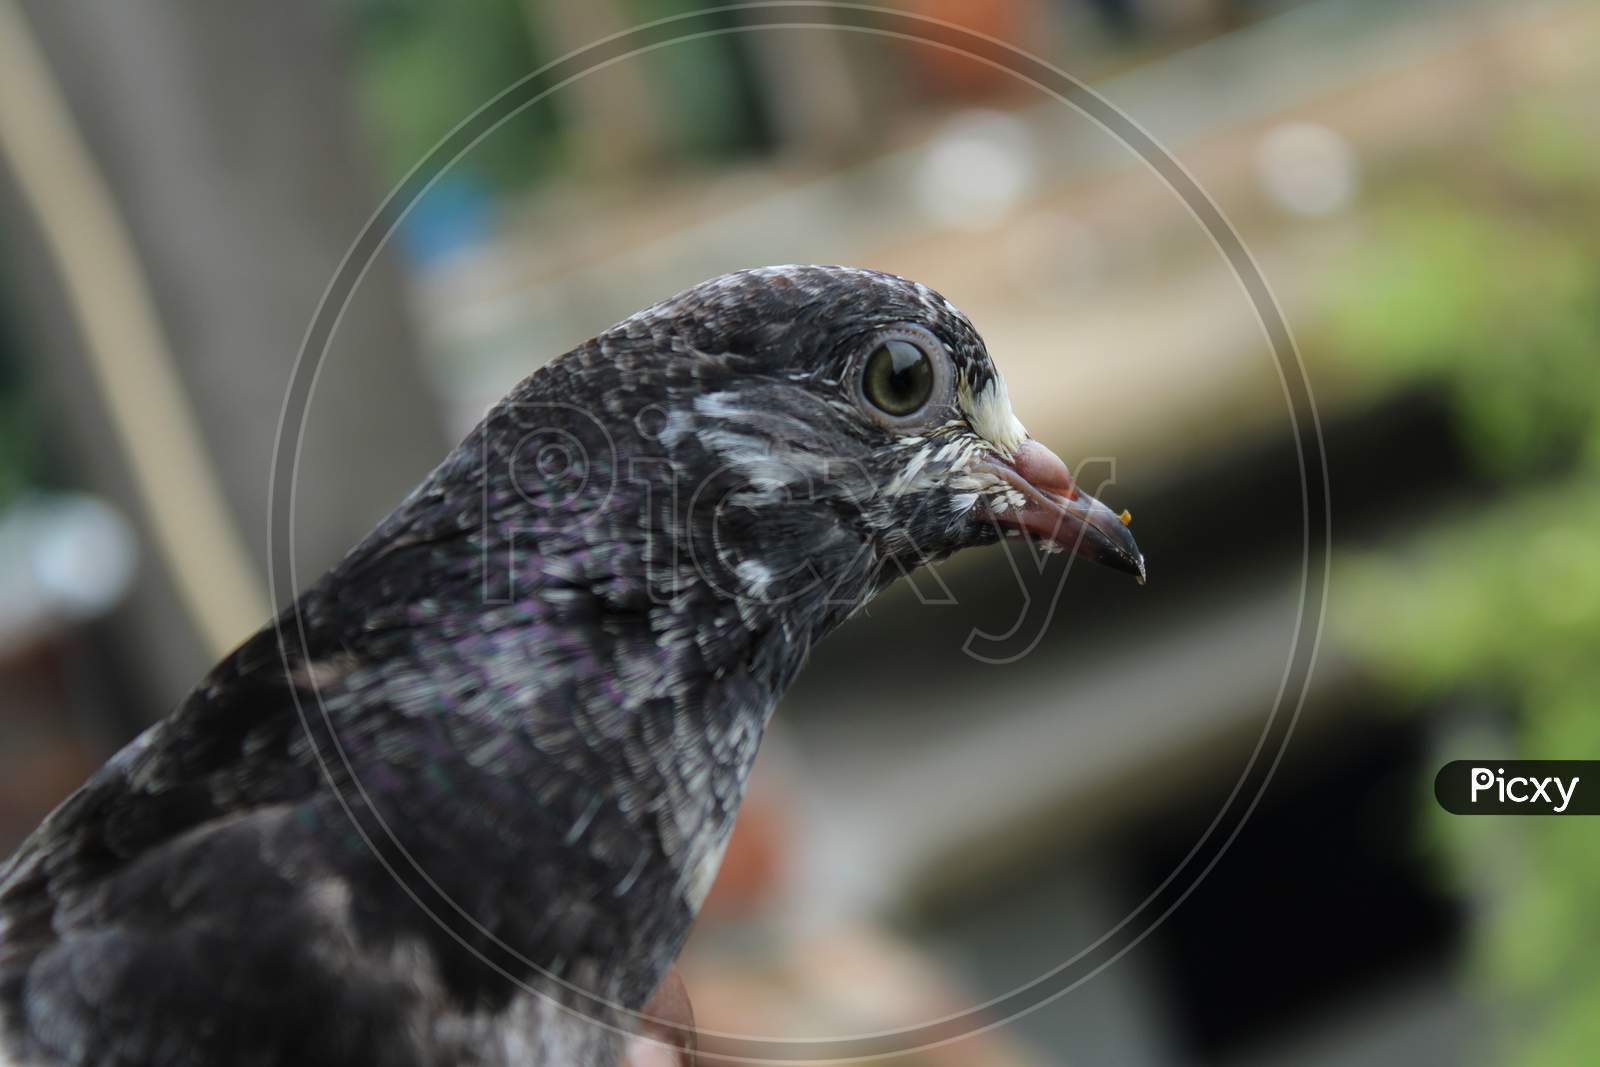 Pigeon bird photo capture from Bangladesh.